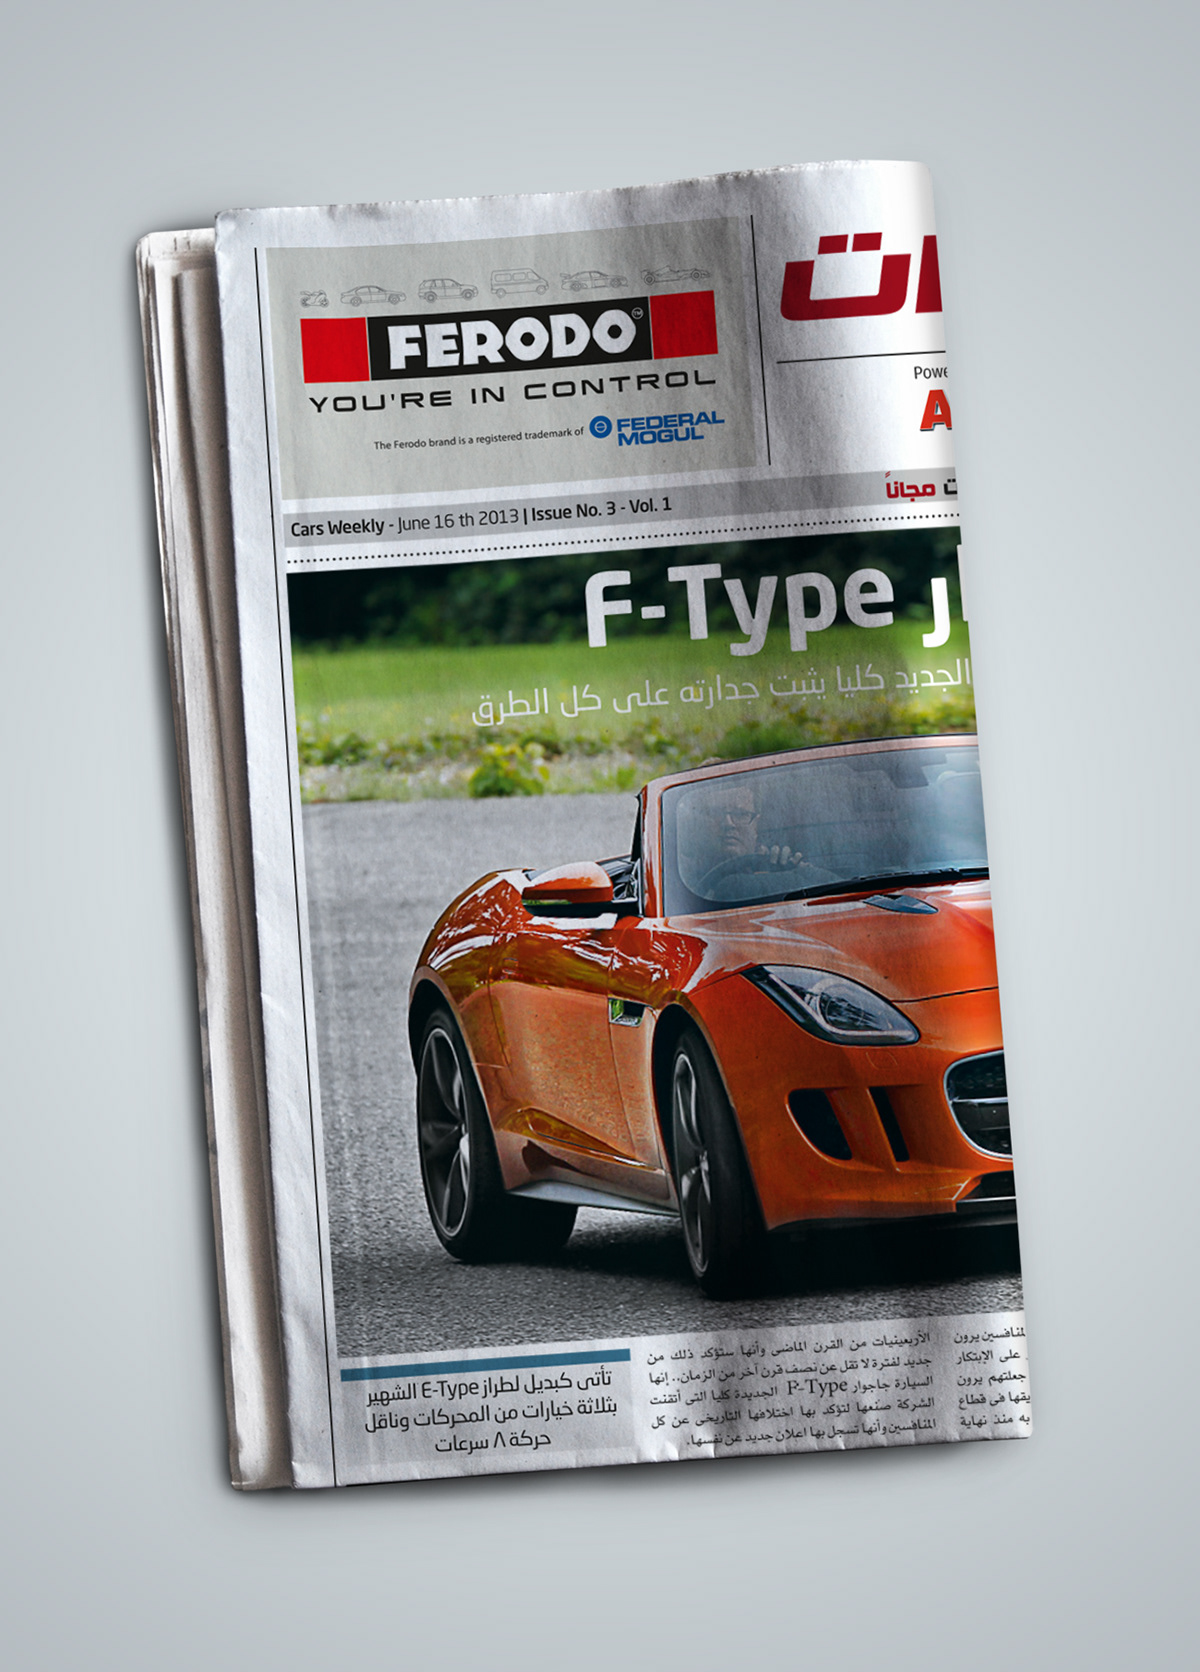 publishing   newspaper Cars autocar Masry Al Youm